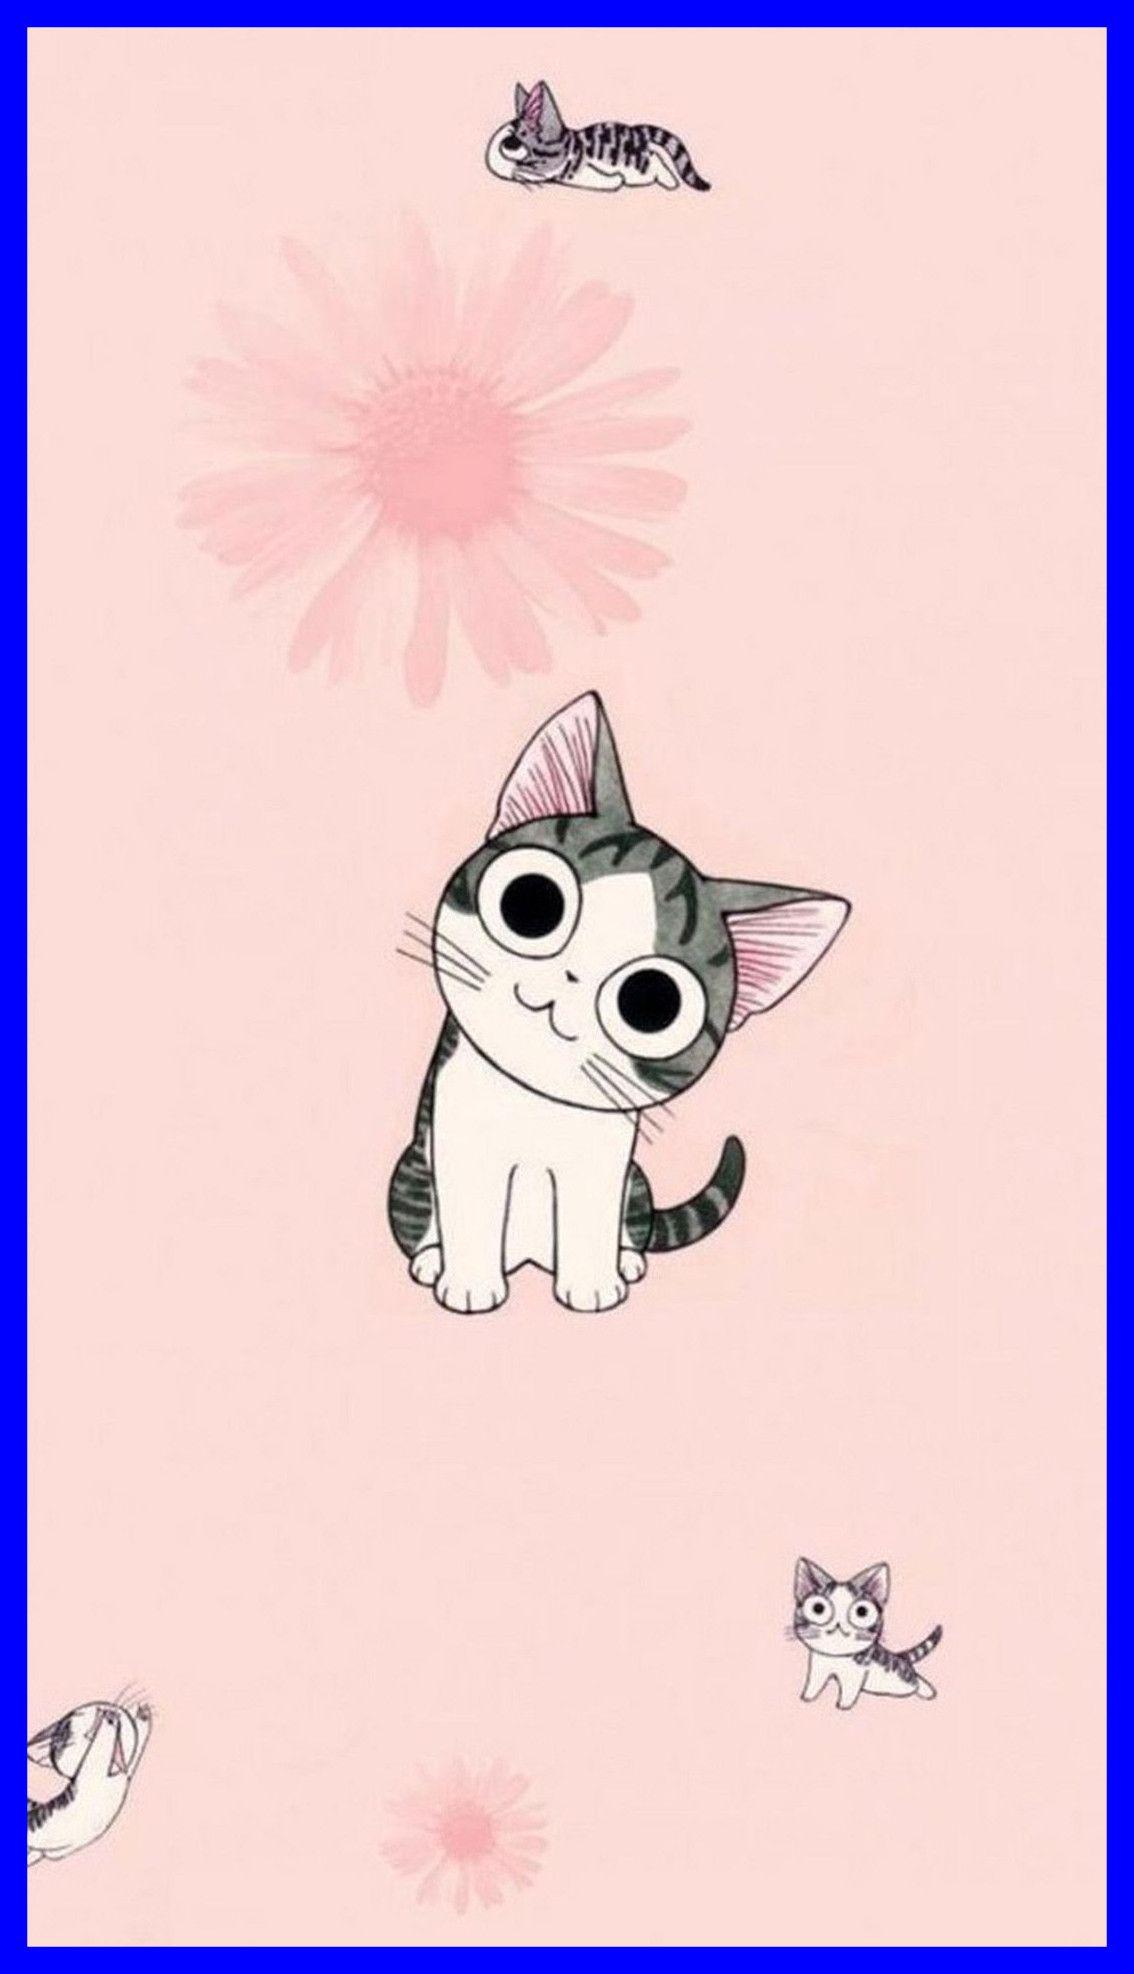 Inspiring Cute Cartoon Cat Wallpaper Adorable Of Popular And Trends